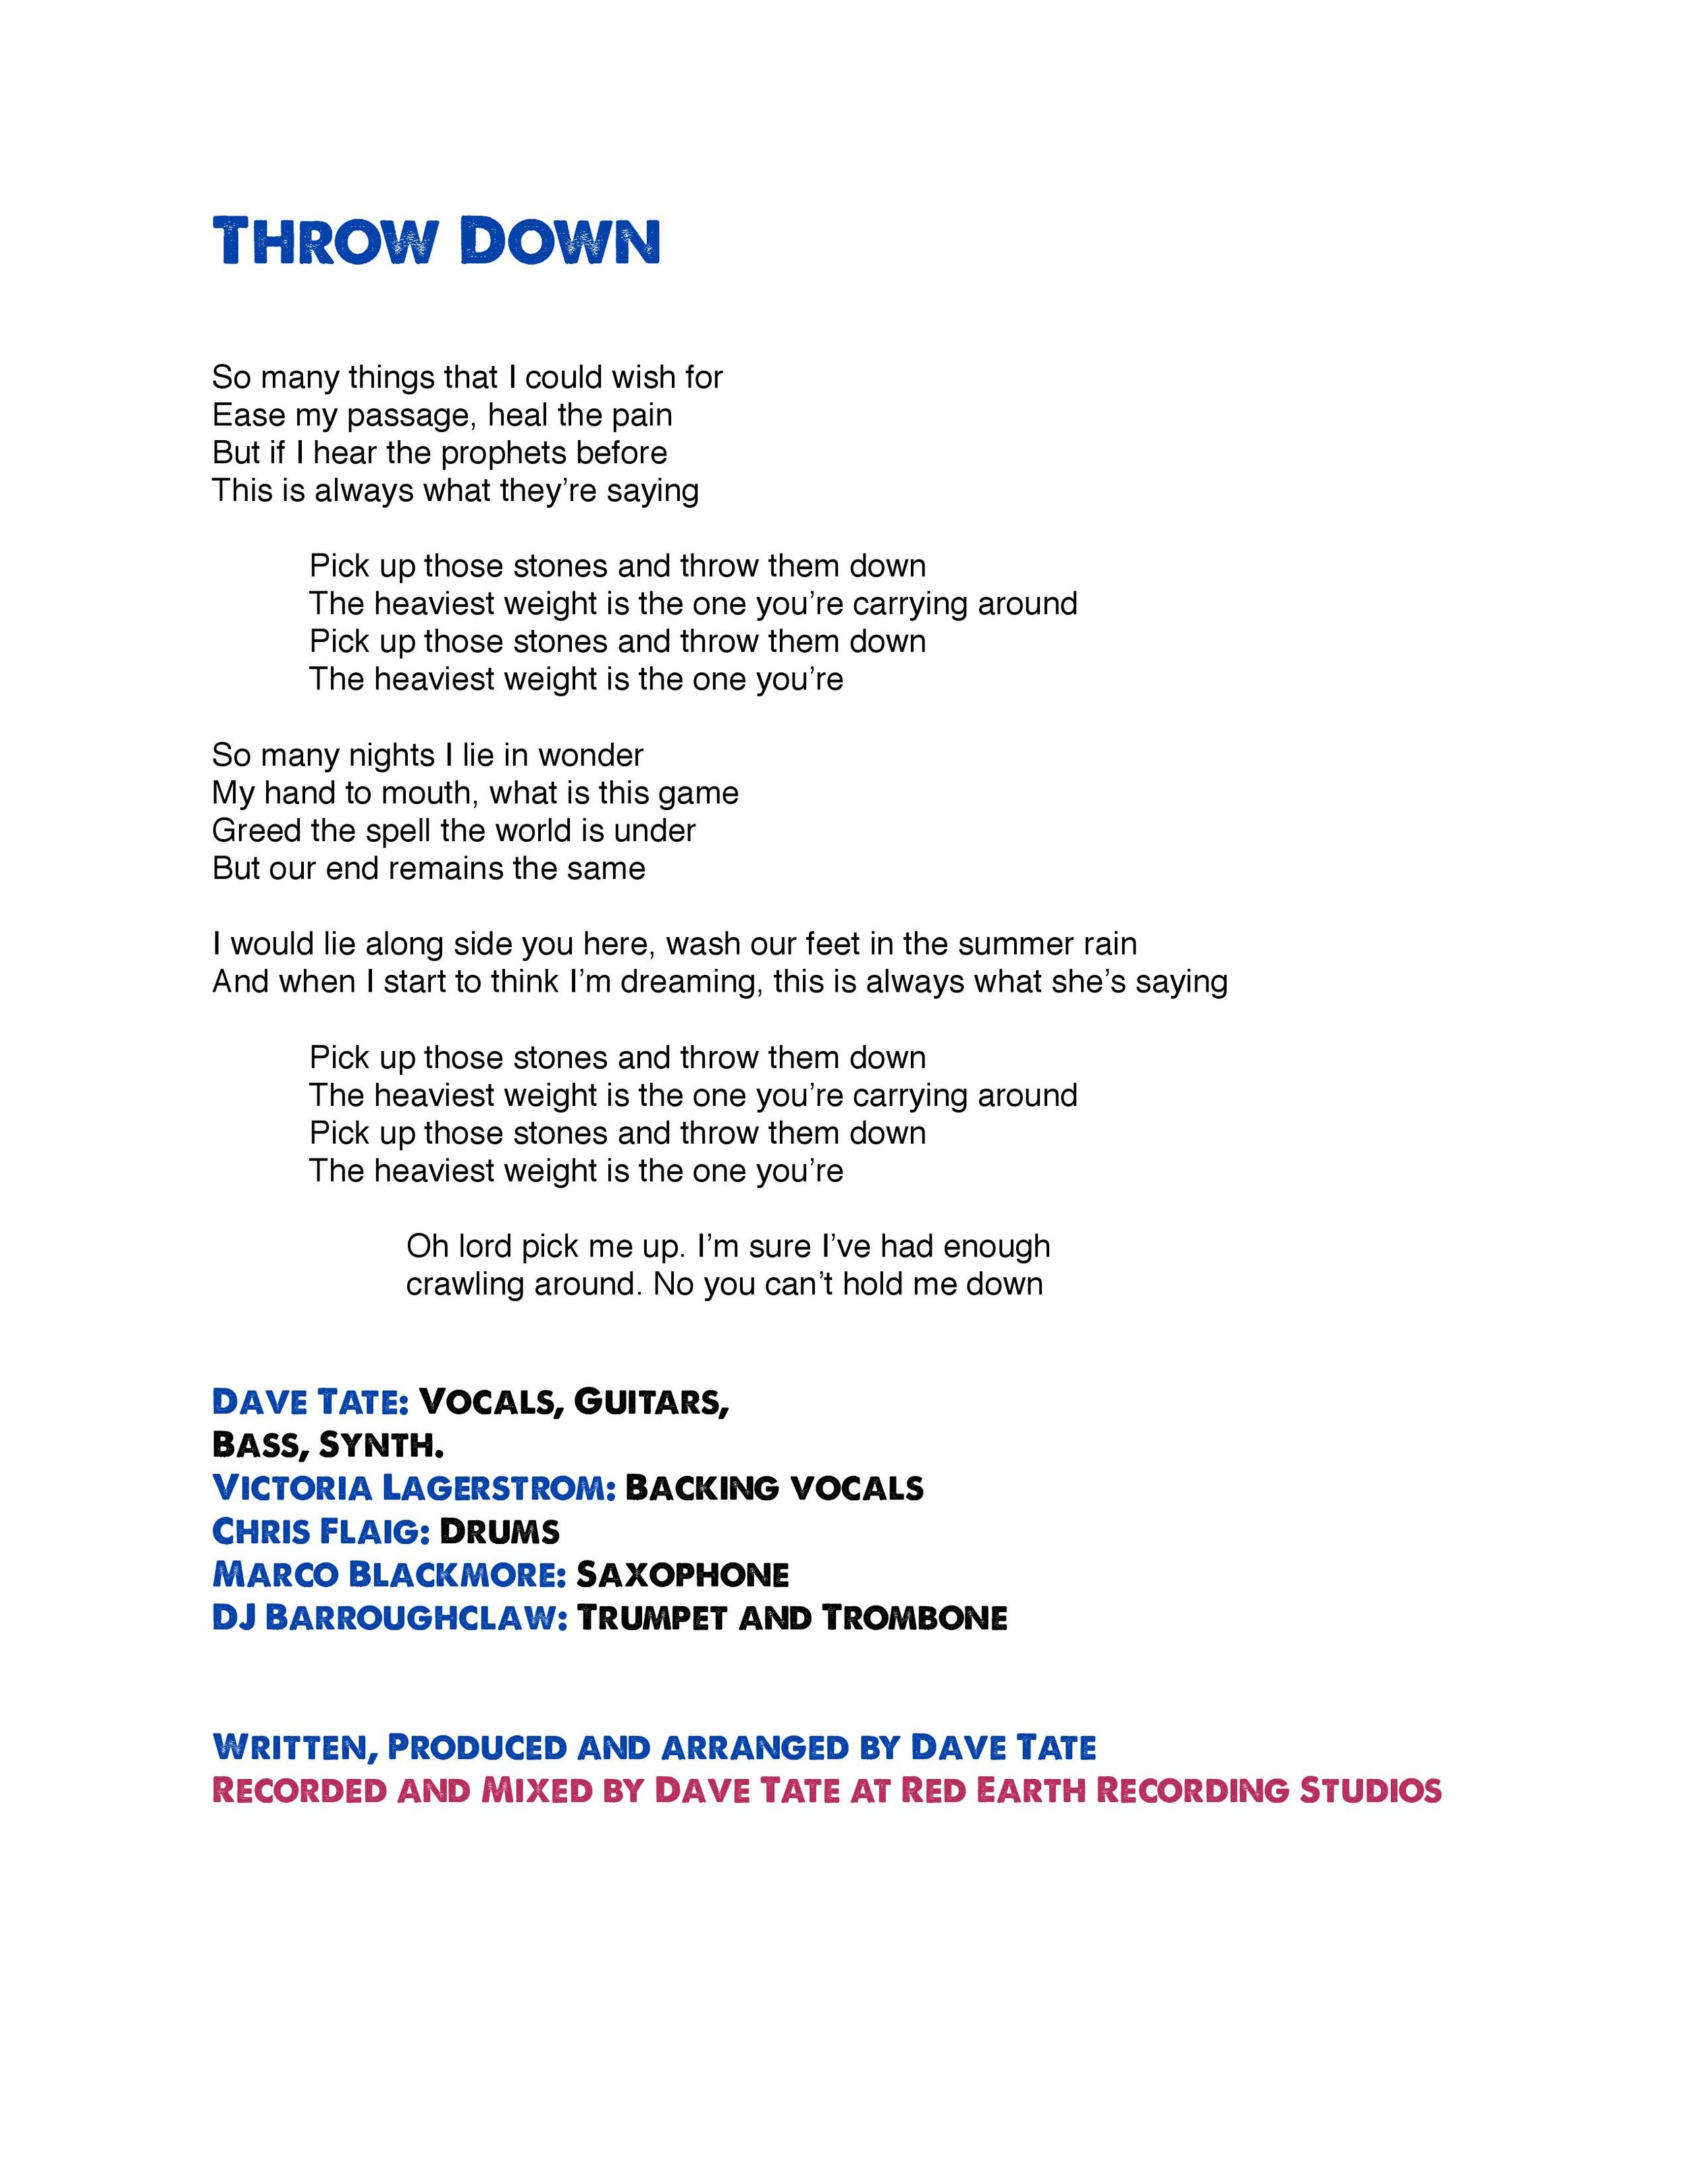 5 Throw Down Lyrics-page-001.jpg